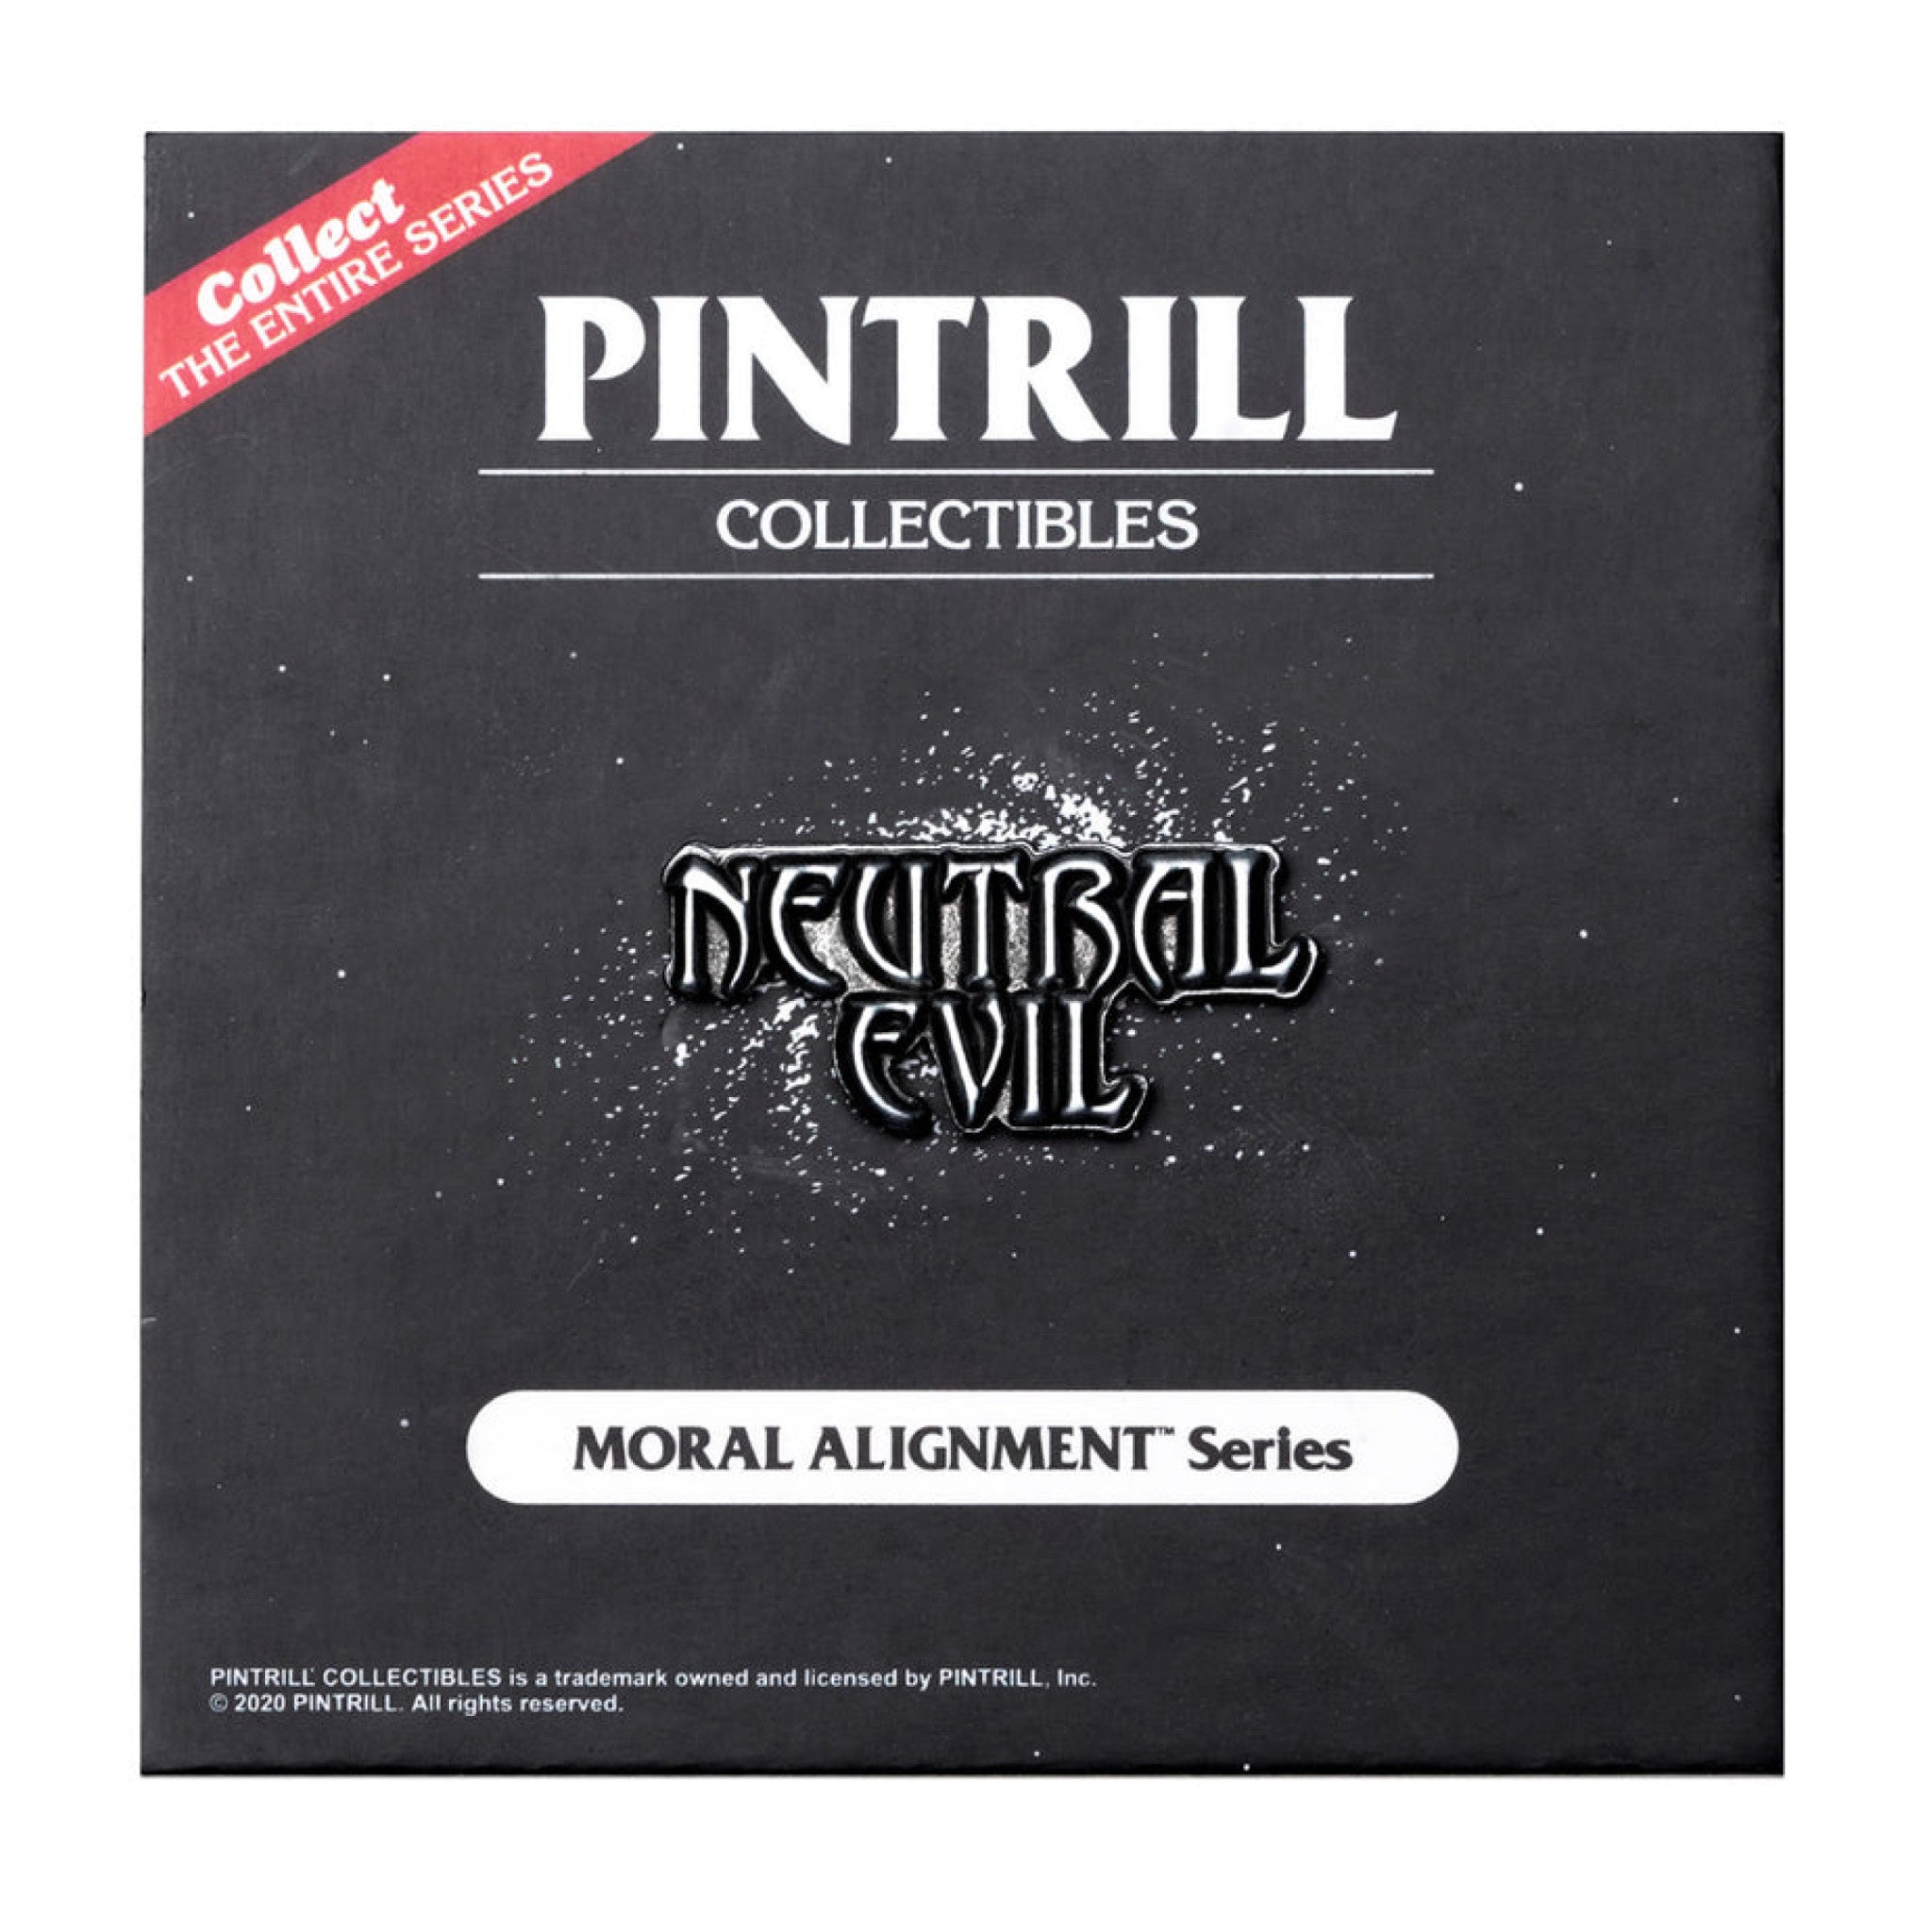 Moral Alignment - Neutral Evil Pin - Wynwood Walls Shop